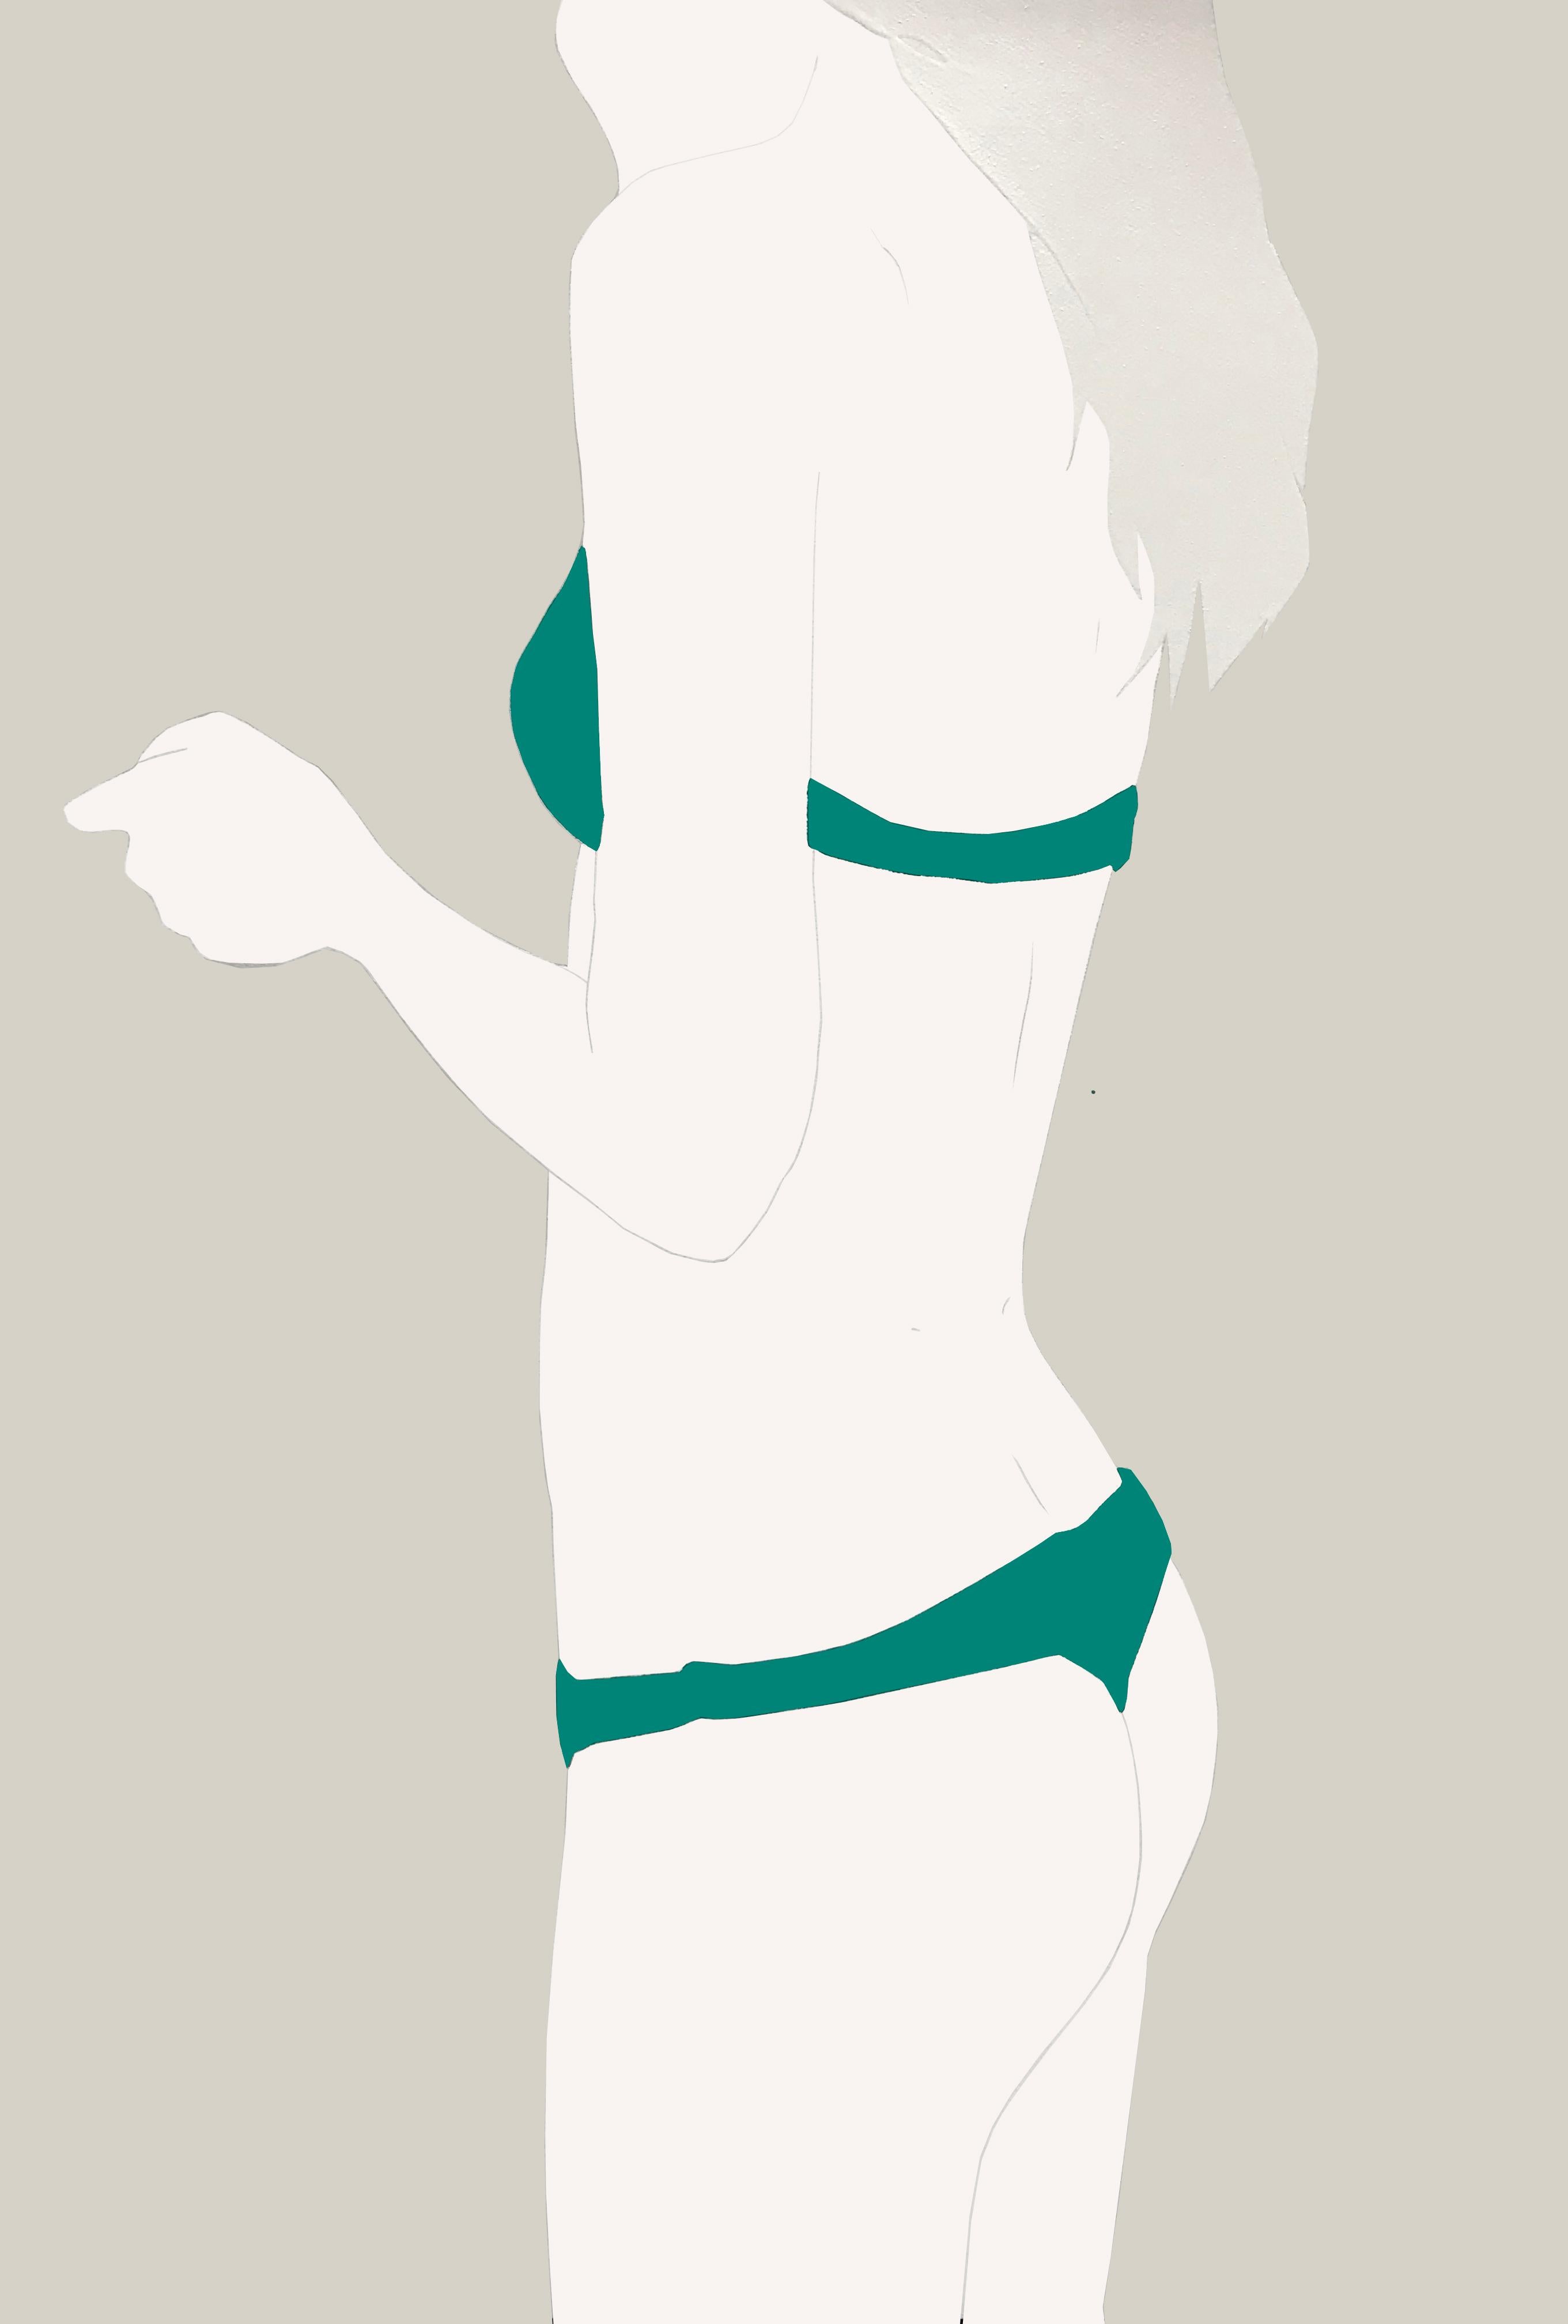 Natasha Law Figurative Painting - Green Swim on Grey